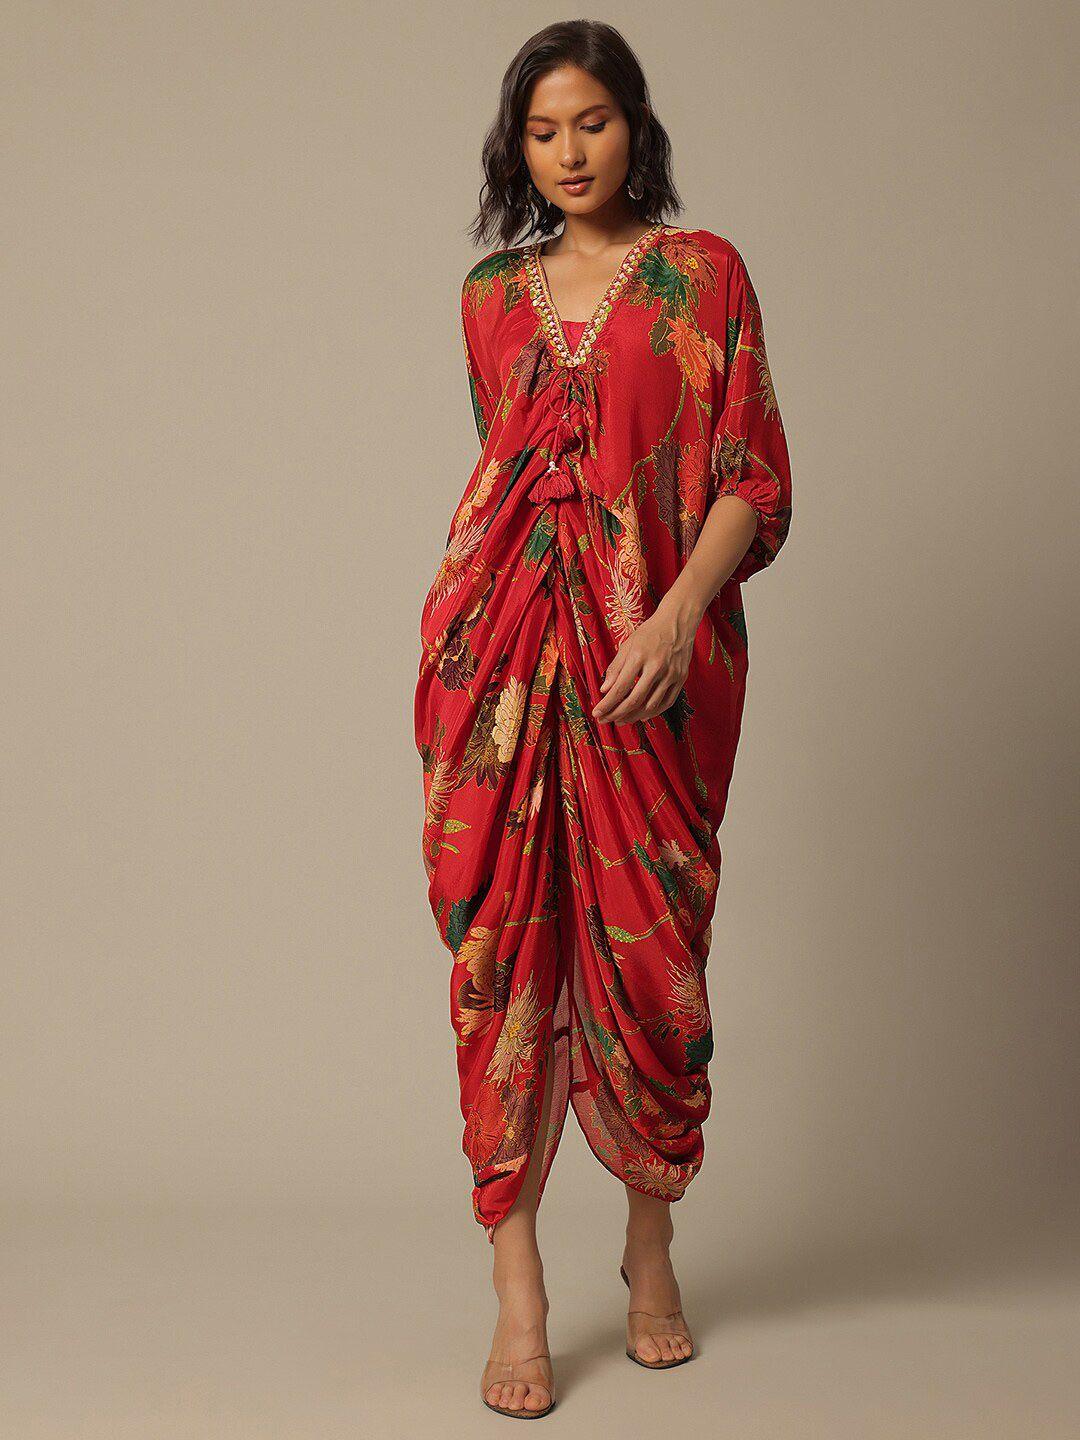 kalki fashion draped ethnic dress